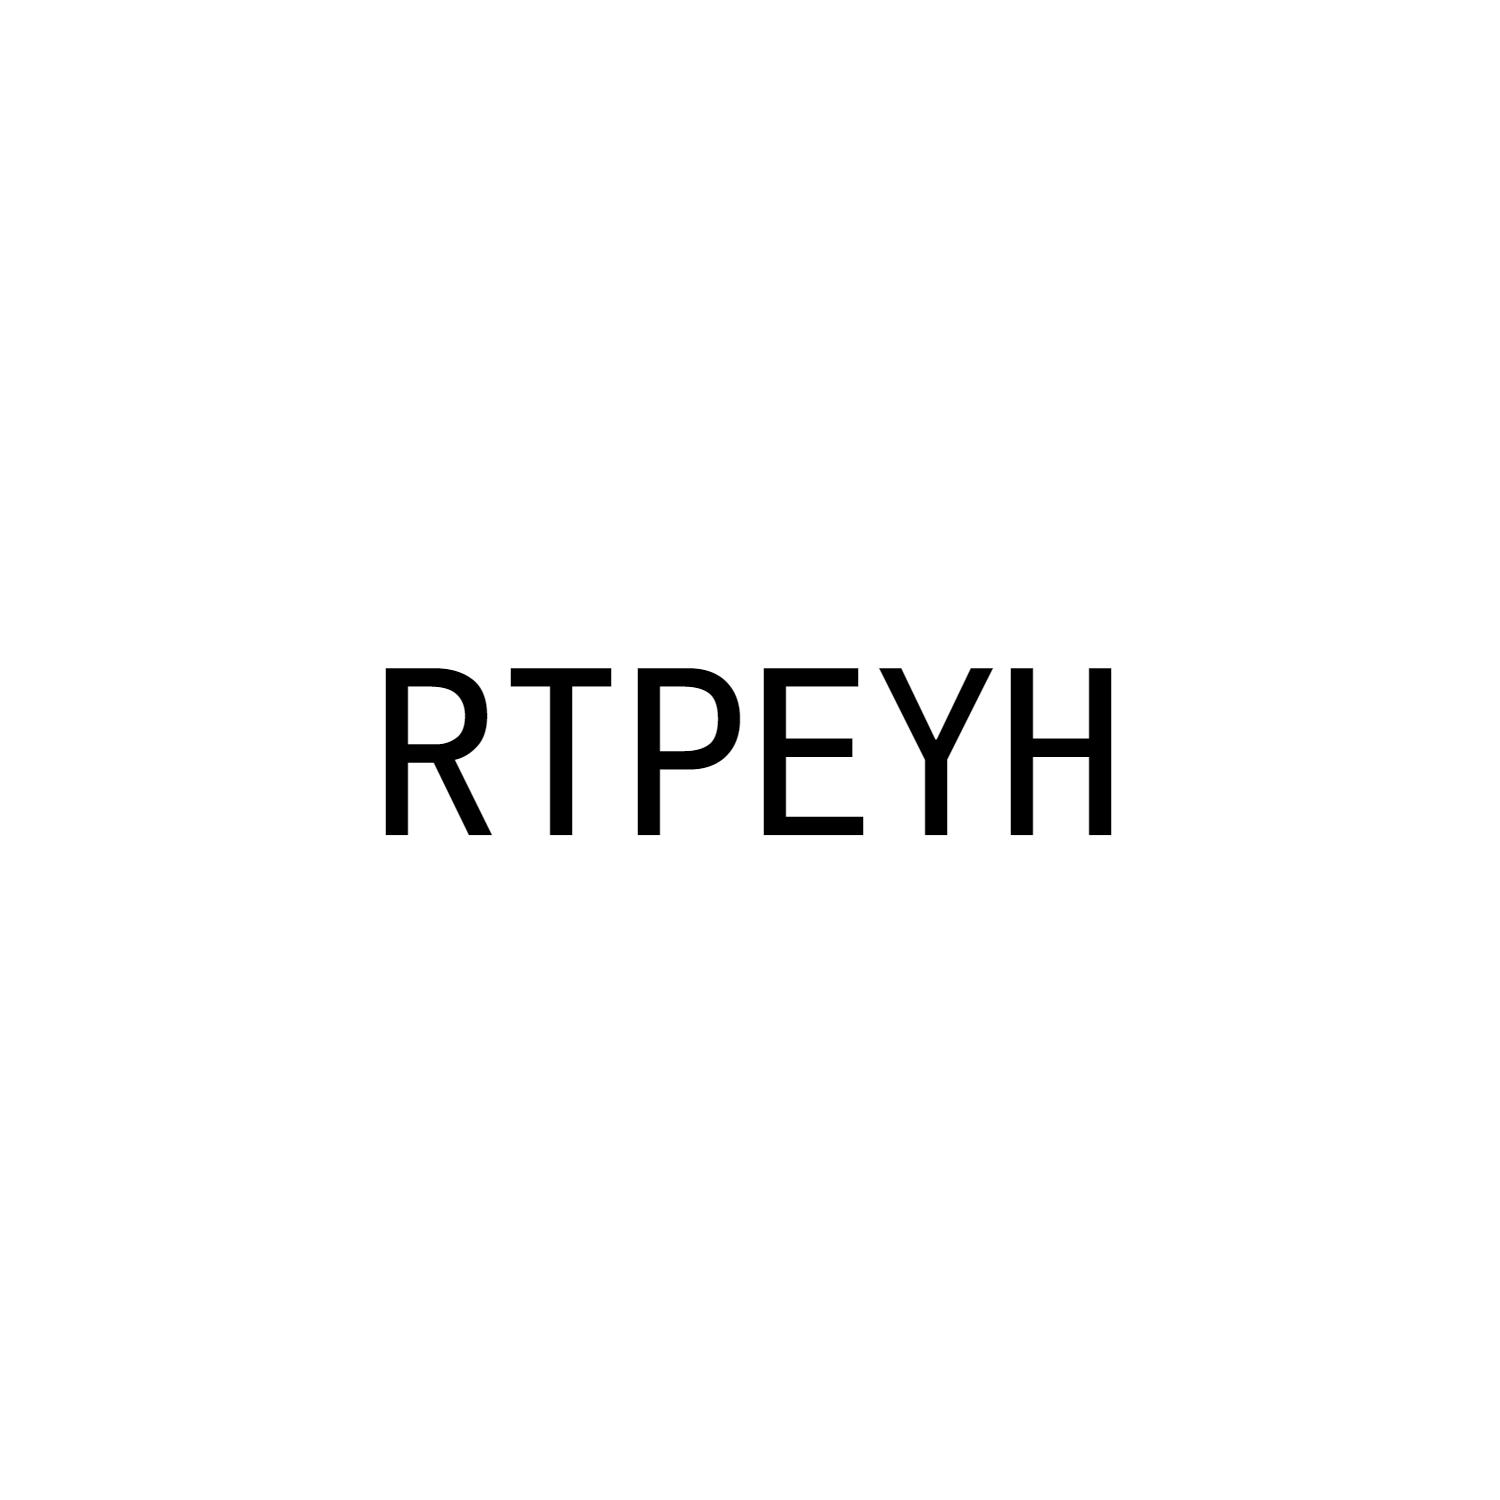 RTPEYH